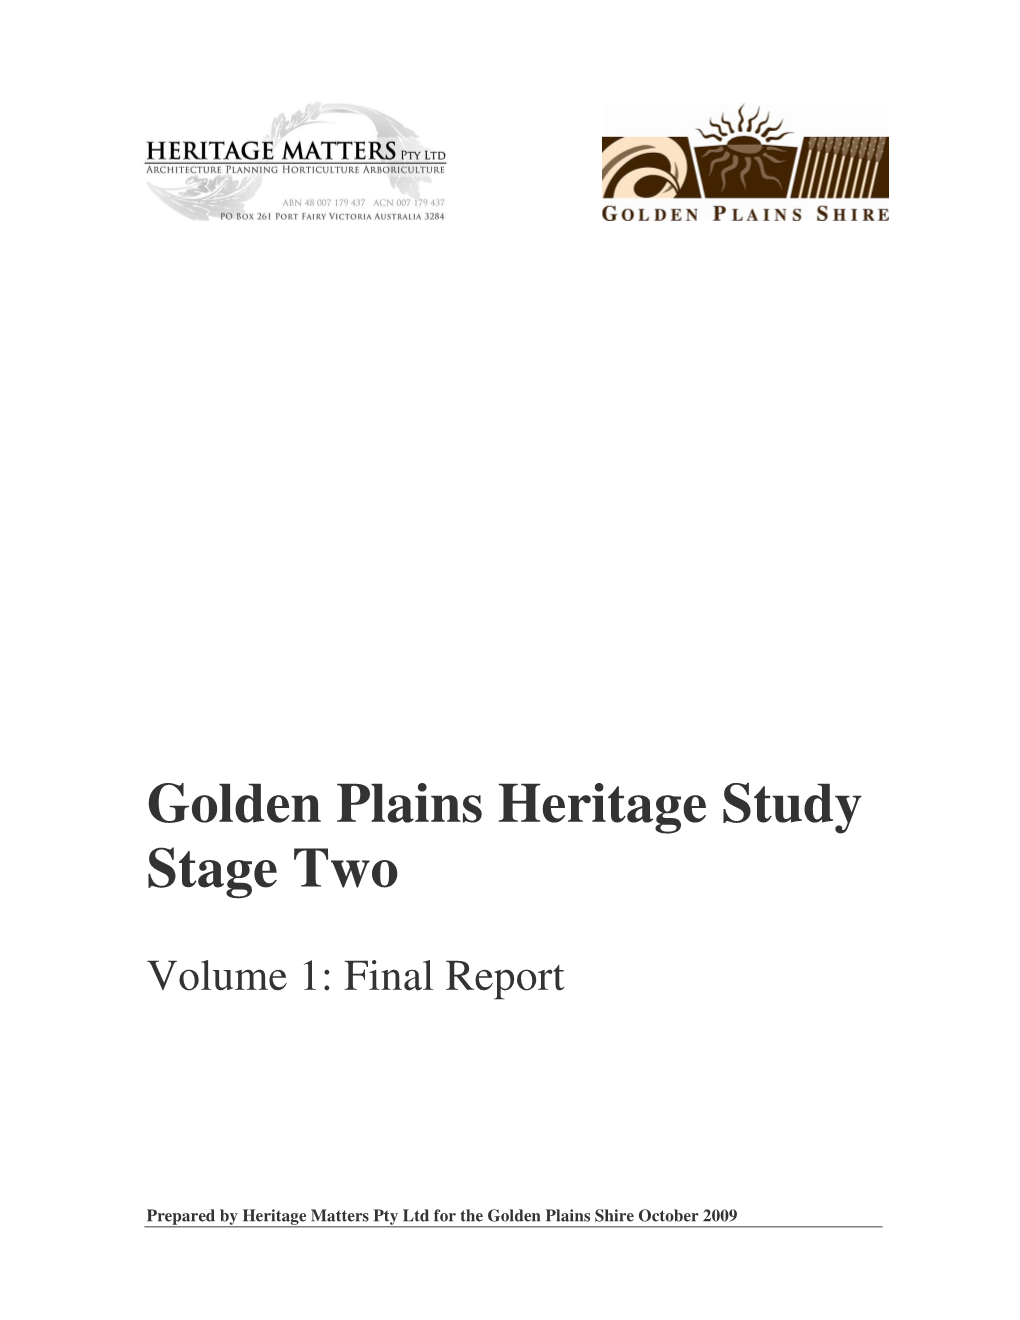 Golden Plains Heritage Study Stage 2